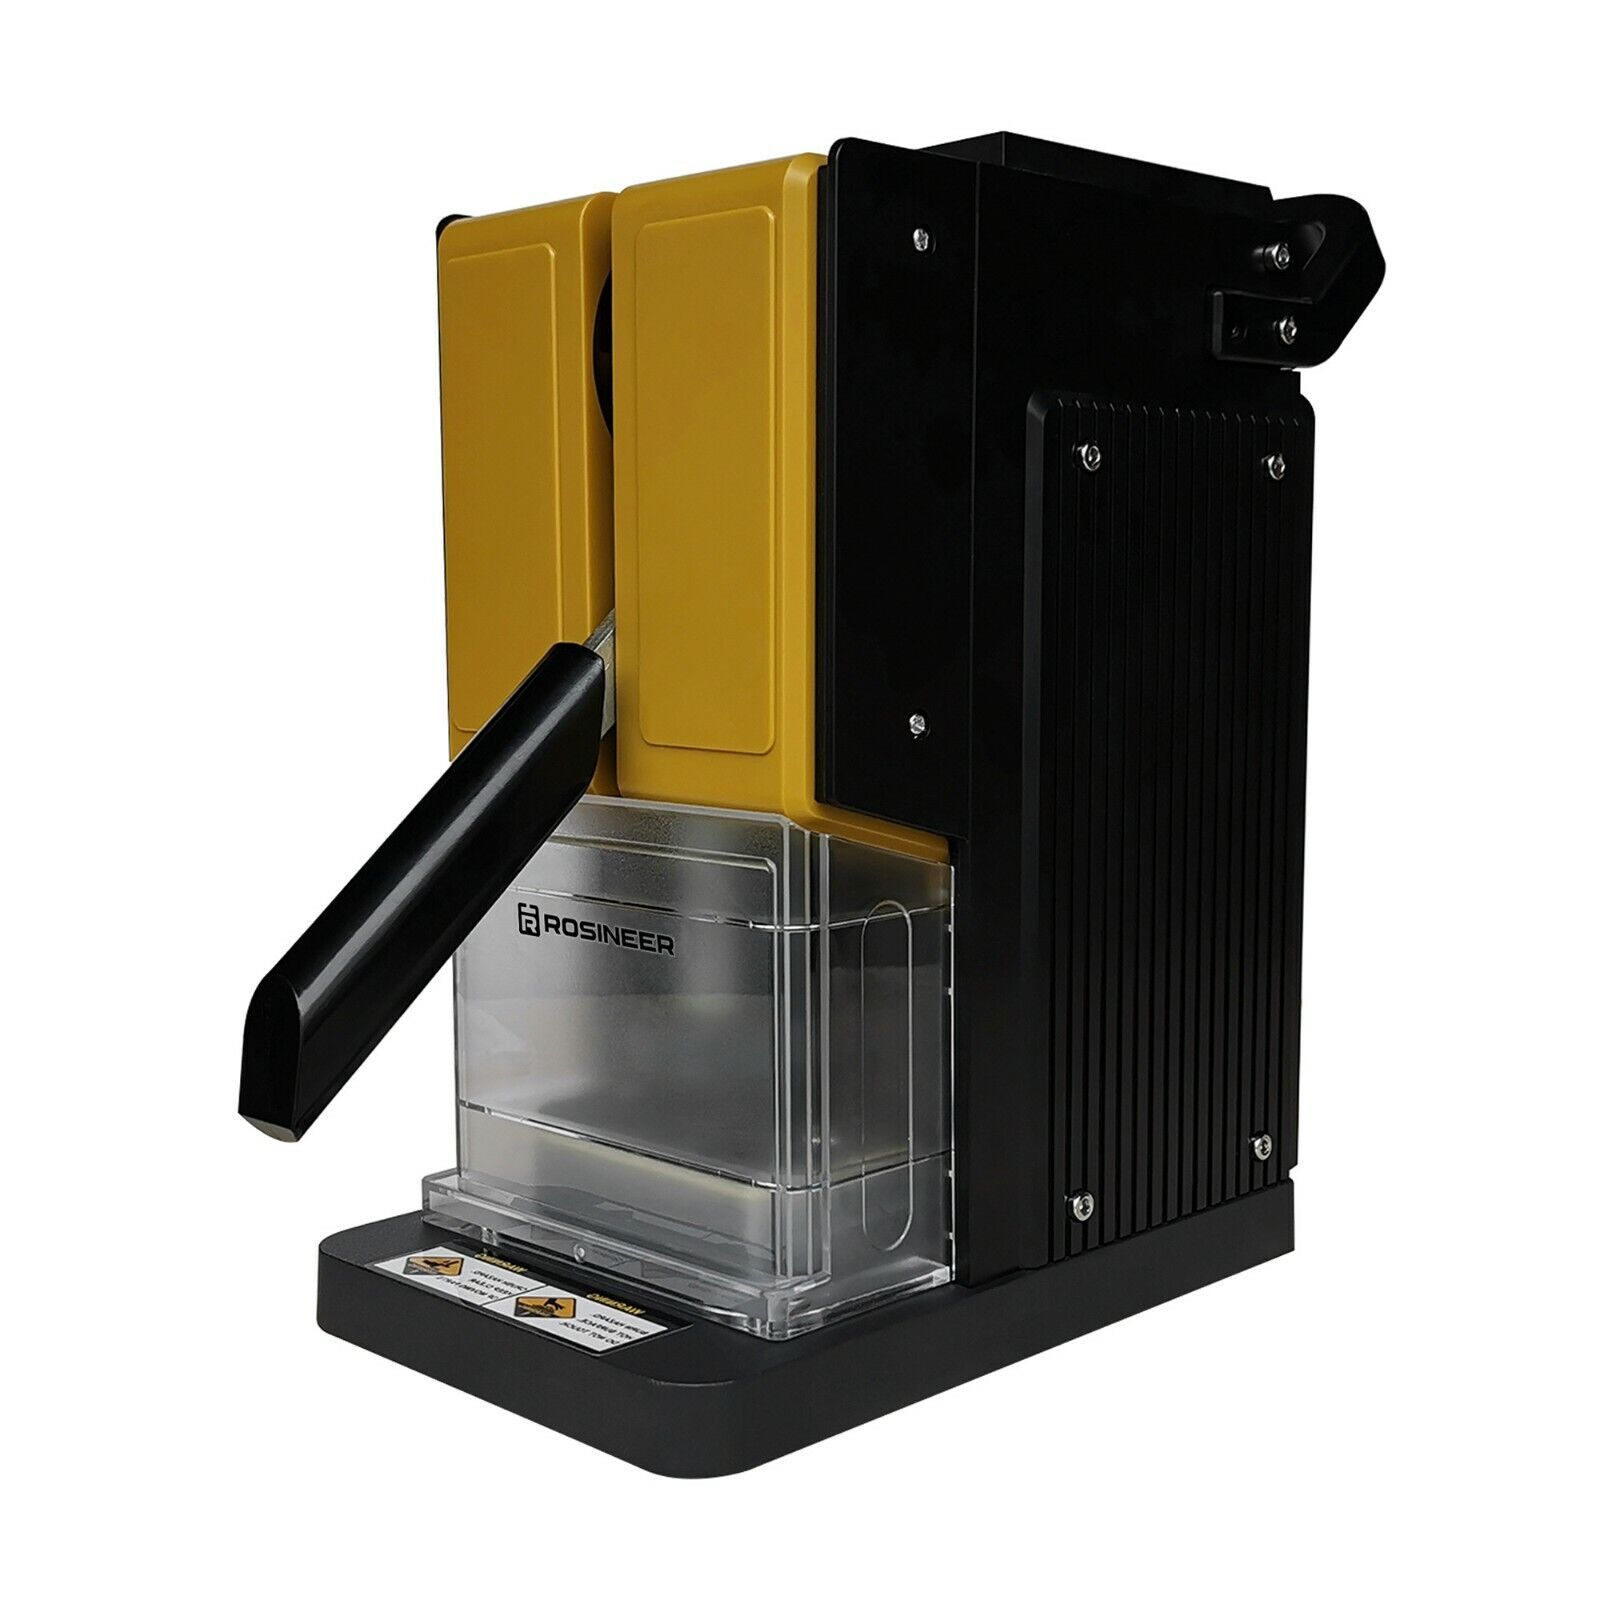 Rosineer PRESSO Personal Heat Press, 1500+ lbs, Dual-Heat Plates, Gold Yellow